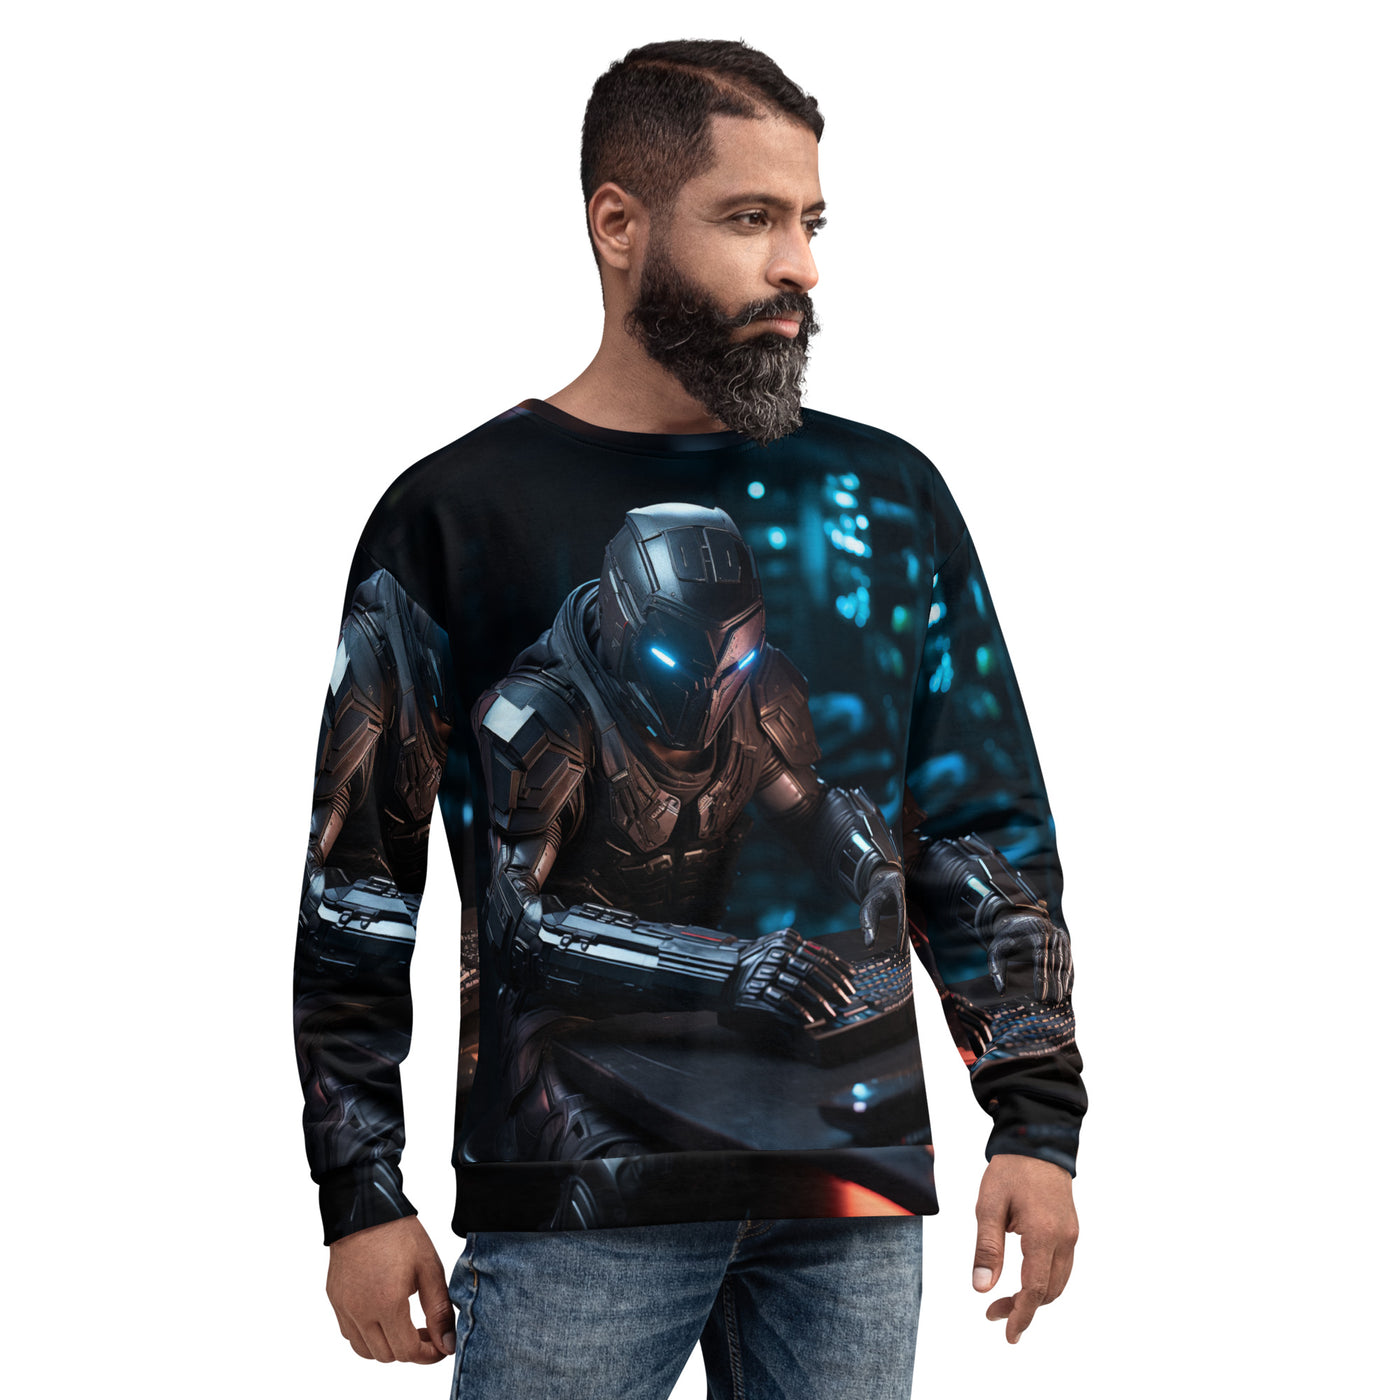 CyberArms Warrior V4 - Unisex Sweatshirt